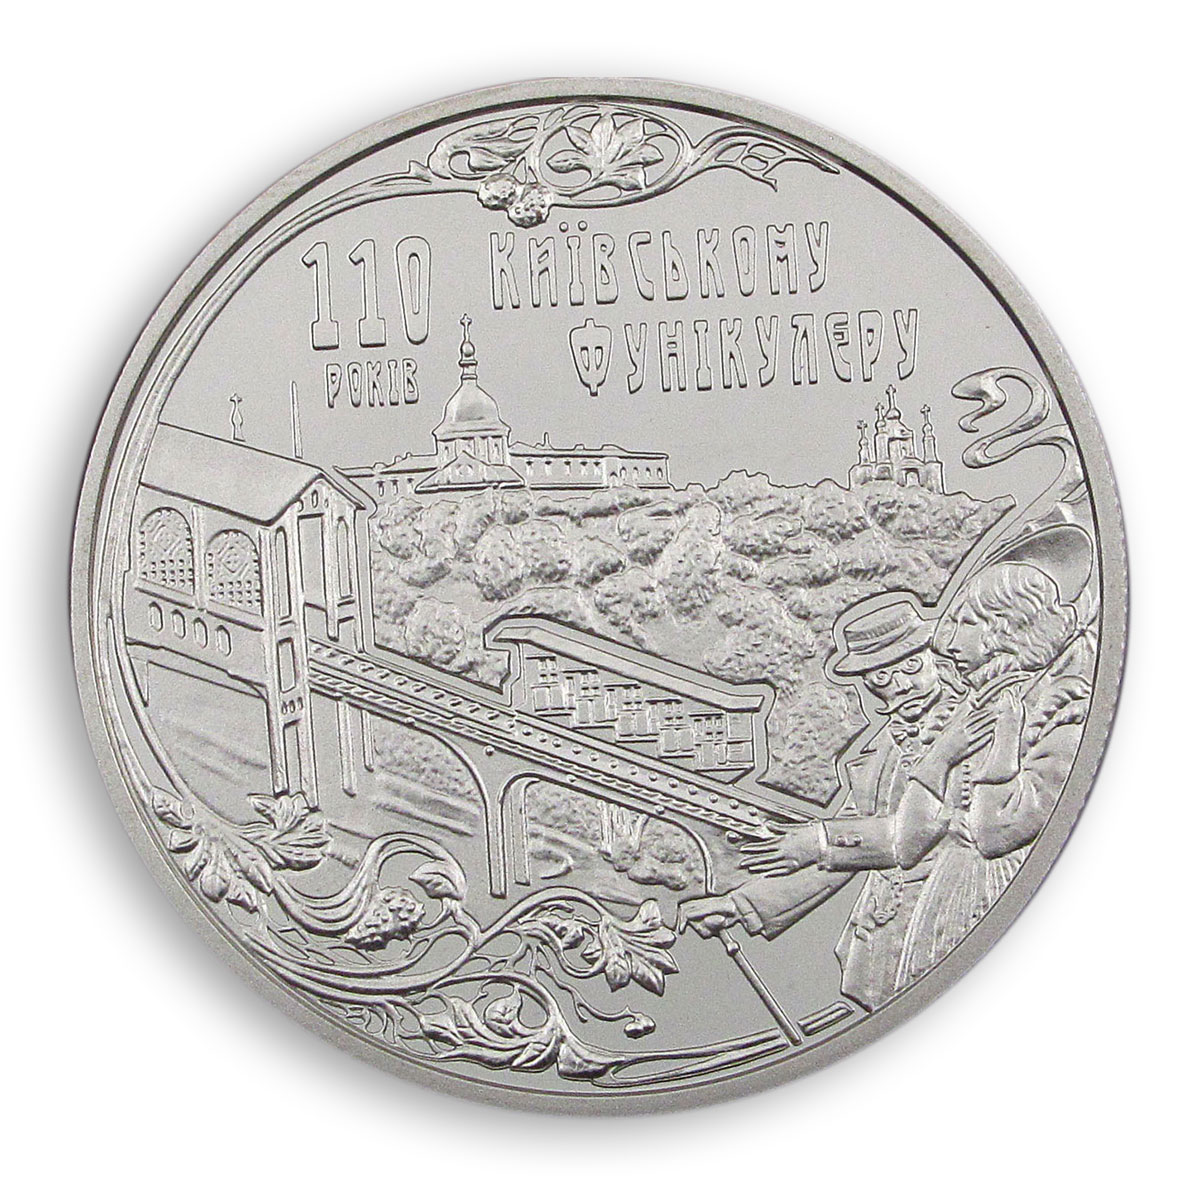 Ukraine 5 hryvnia 110 years Kyiv Funicular Kiev cable railway nickel coin 2015